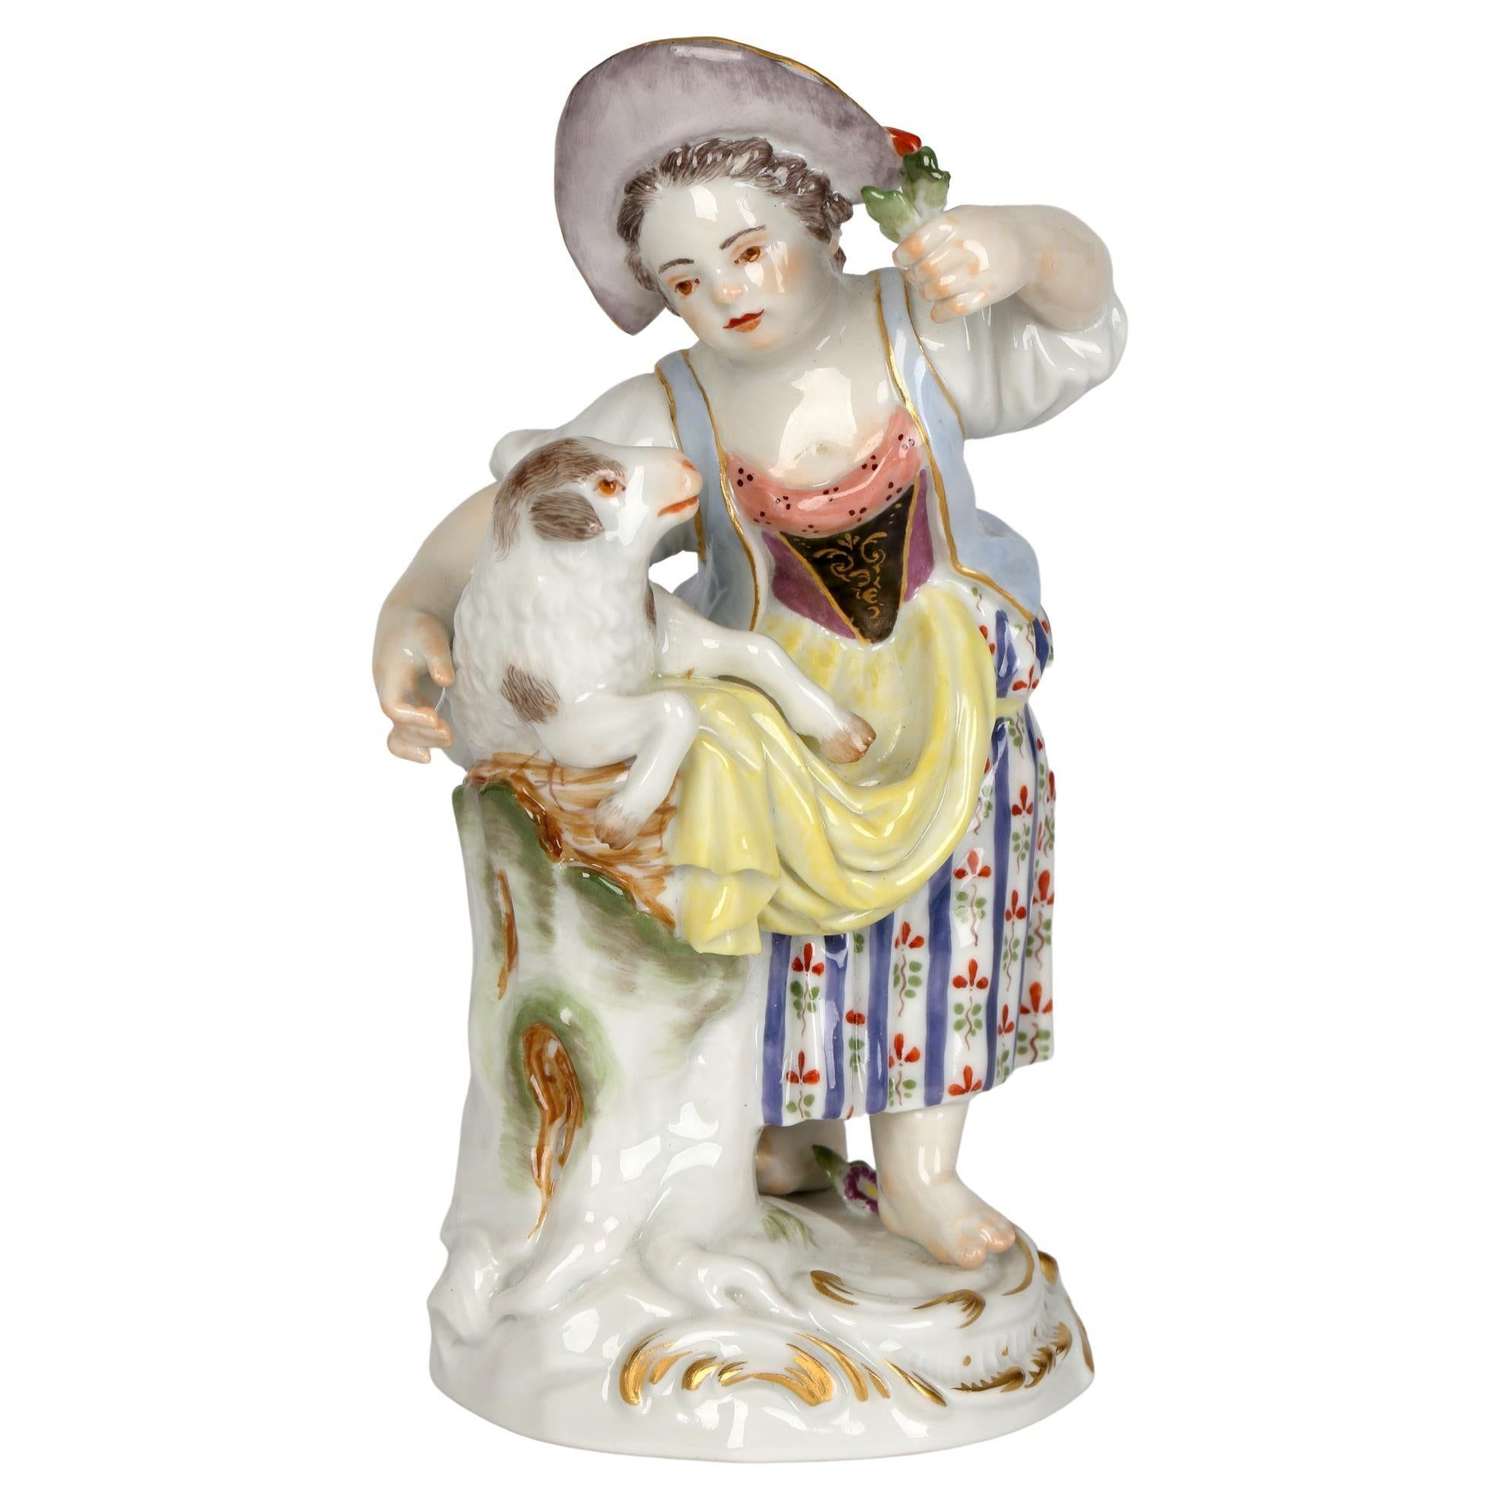 Meissen Porcelain Figurine of a Girl Feeding a Sheep